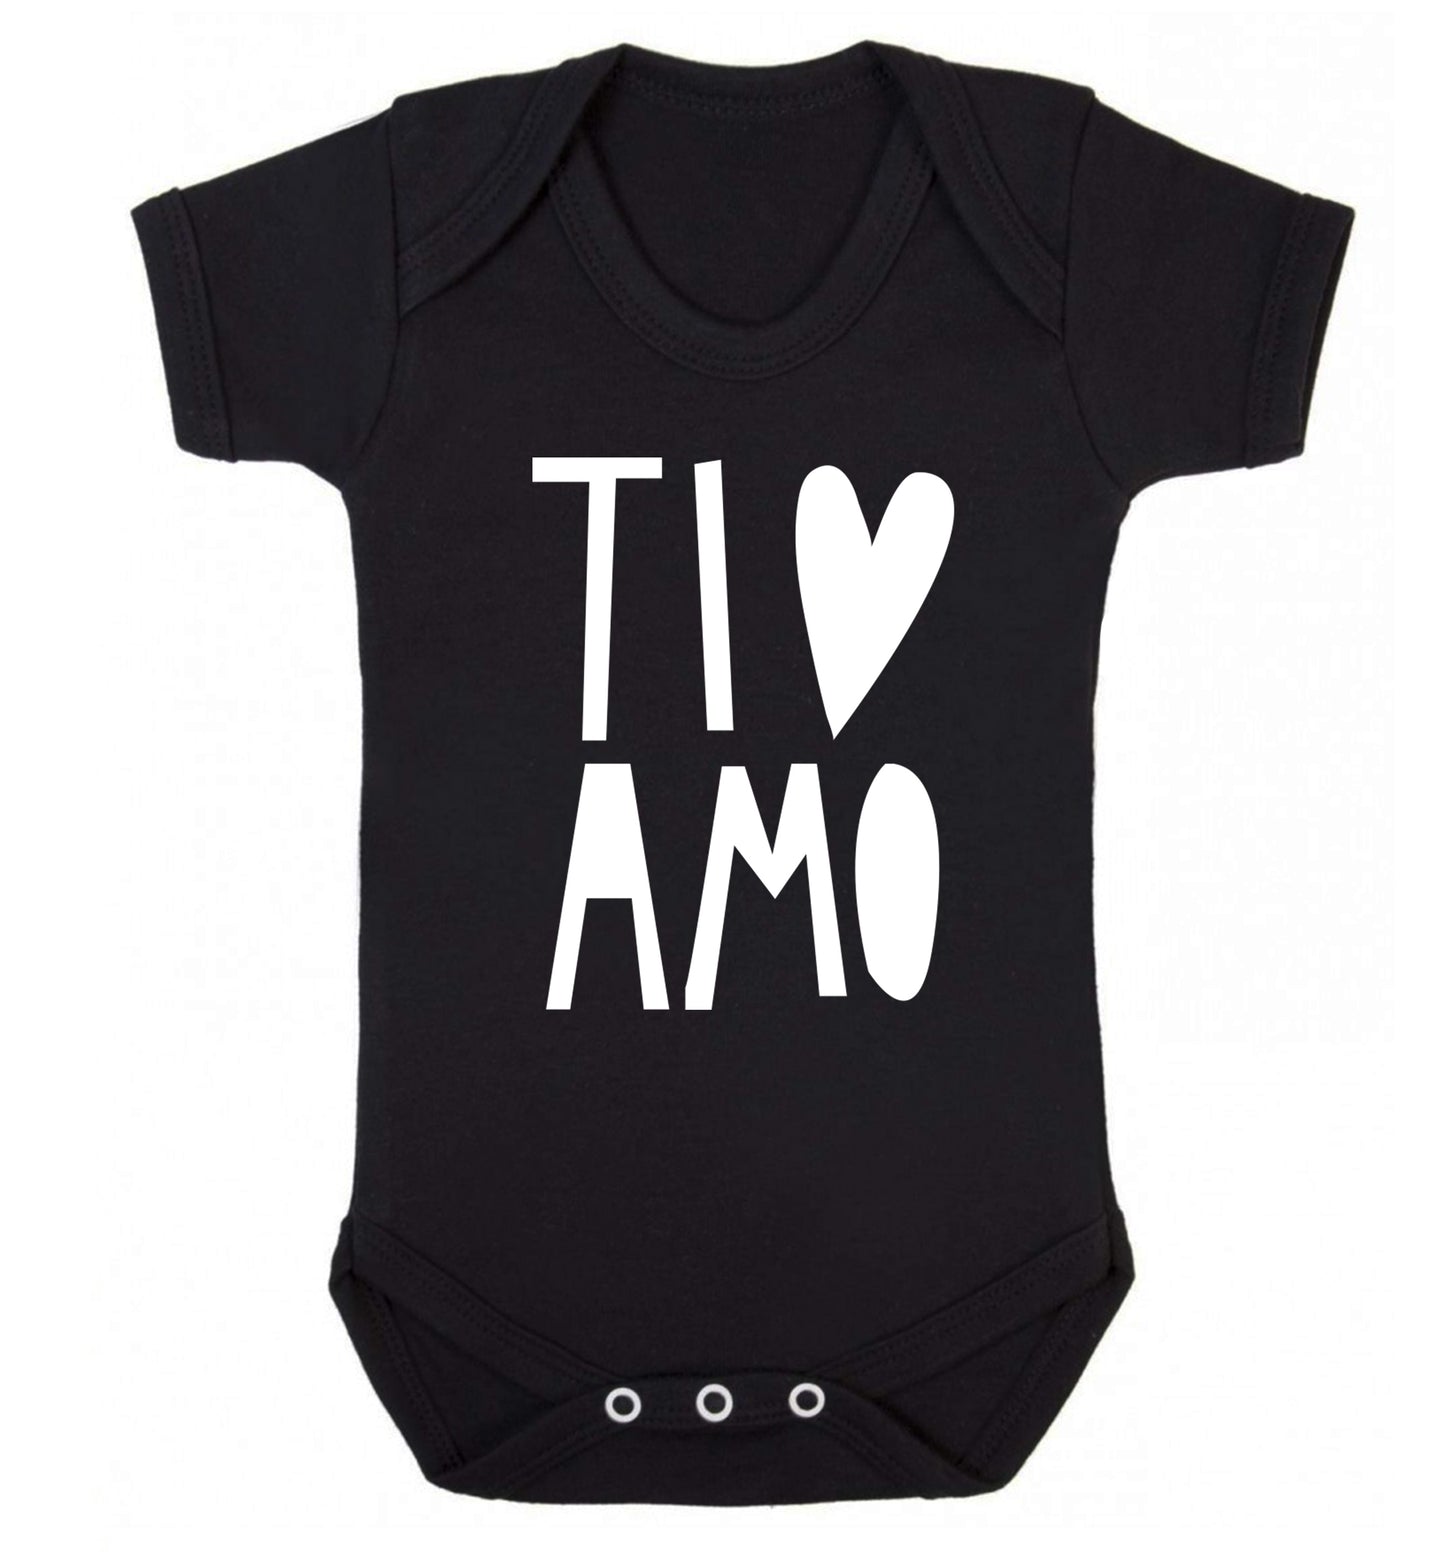 Ti amo - I love you Baby Vest black 18-24 months